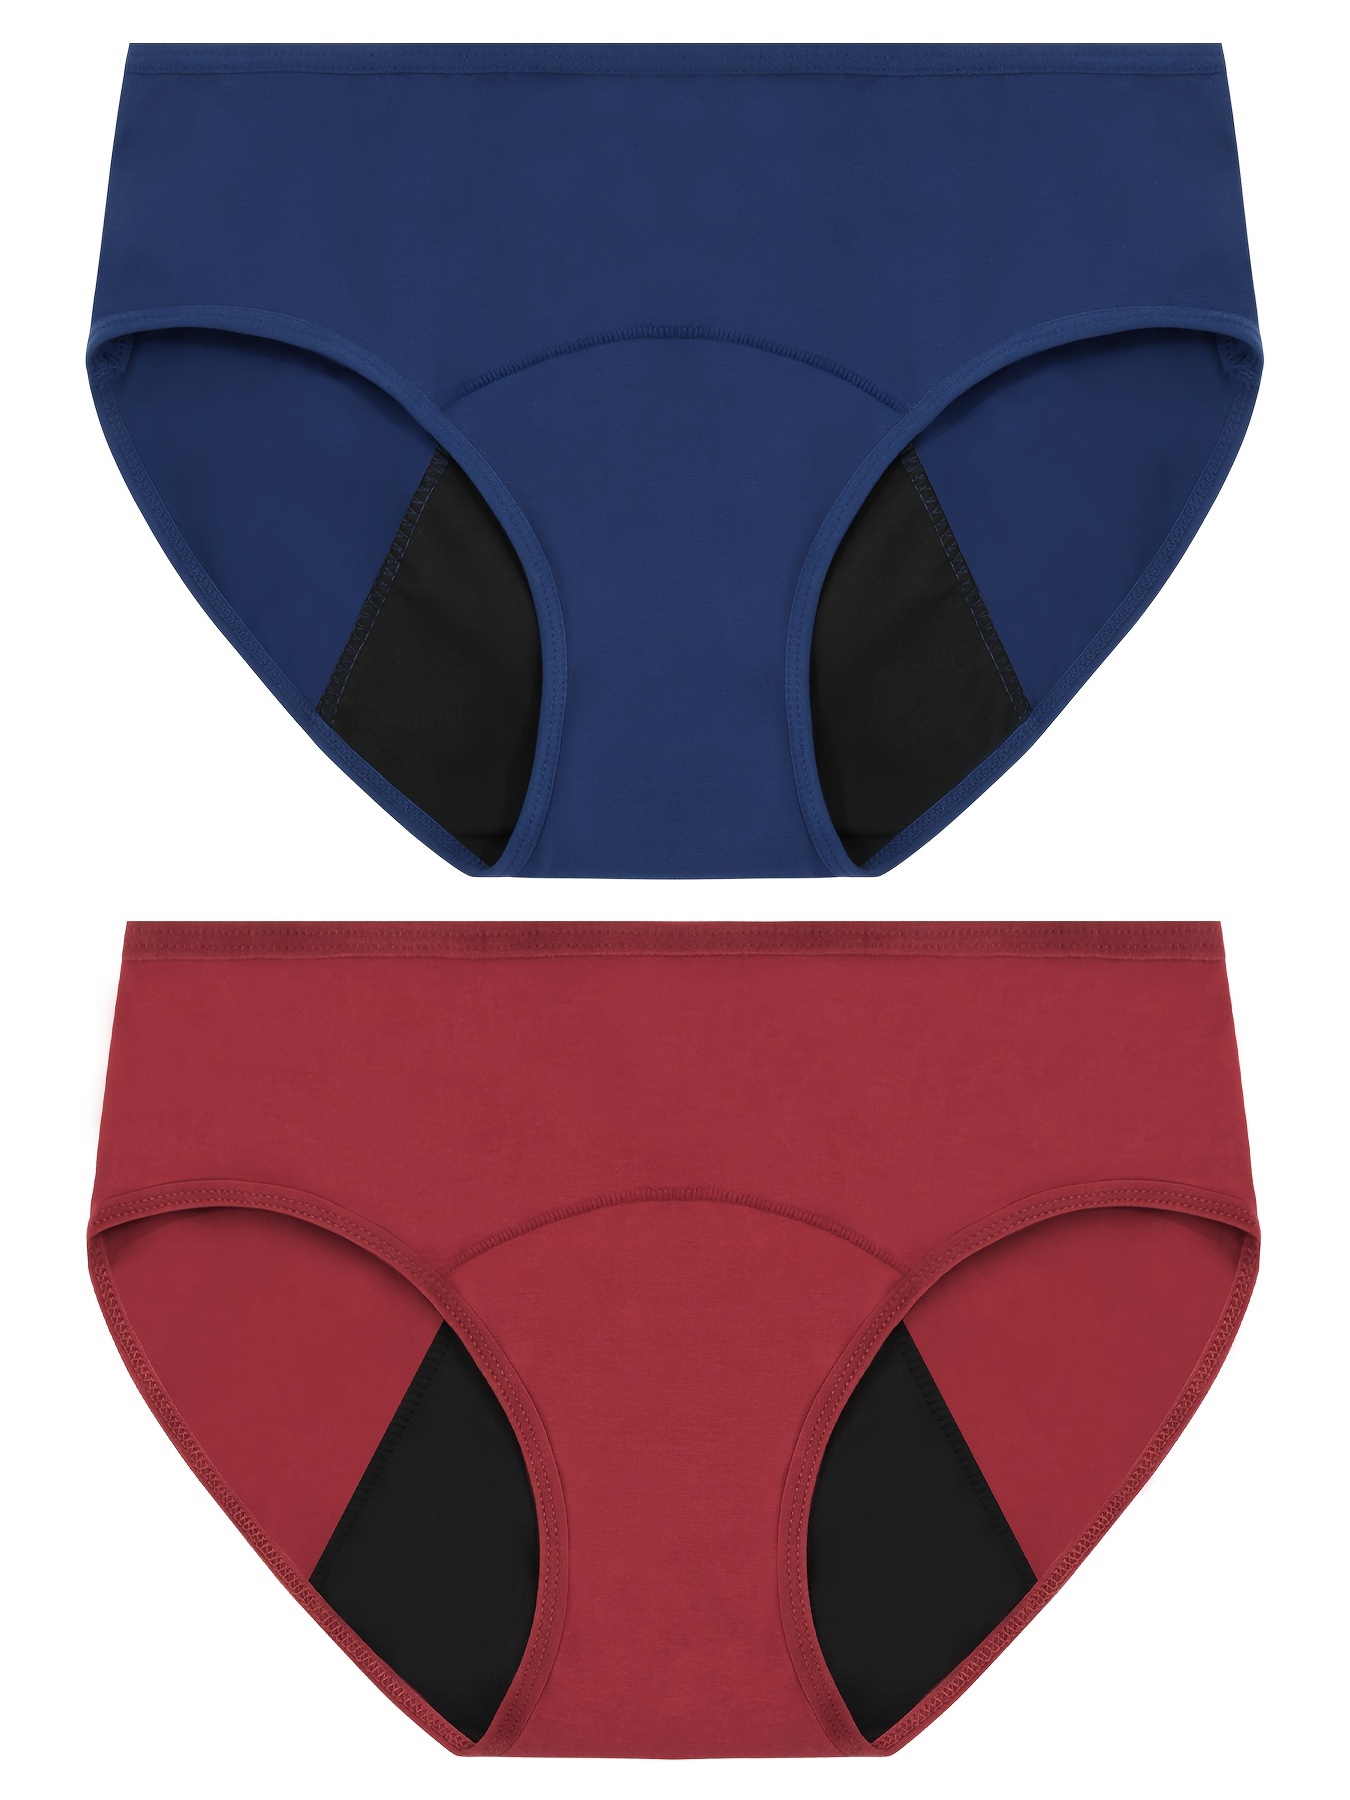 Panties for women,underwear comfortable cotton briefs